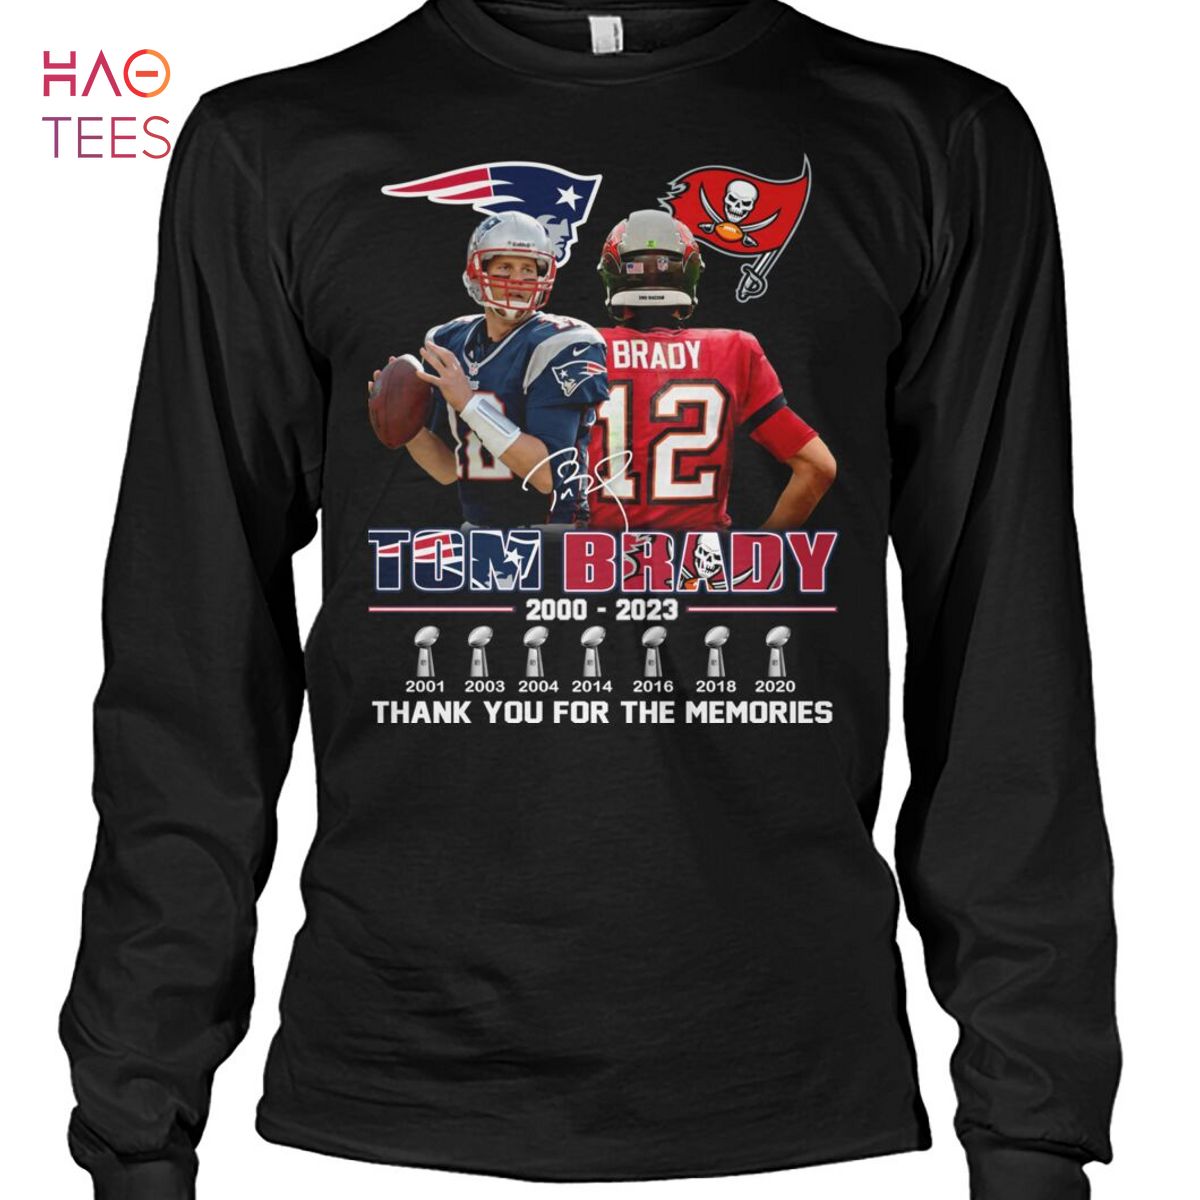 Tom Brady 2000 2023 Thank You For The Memories Shirt